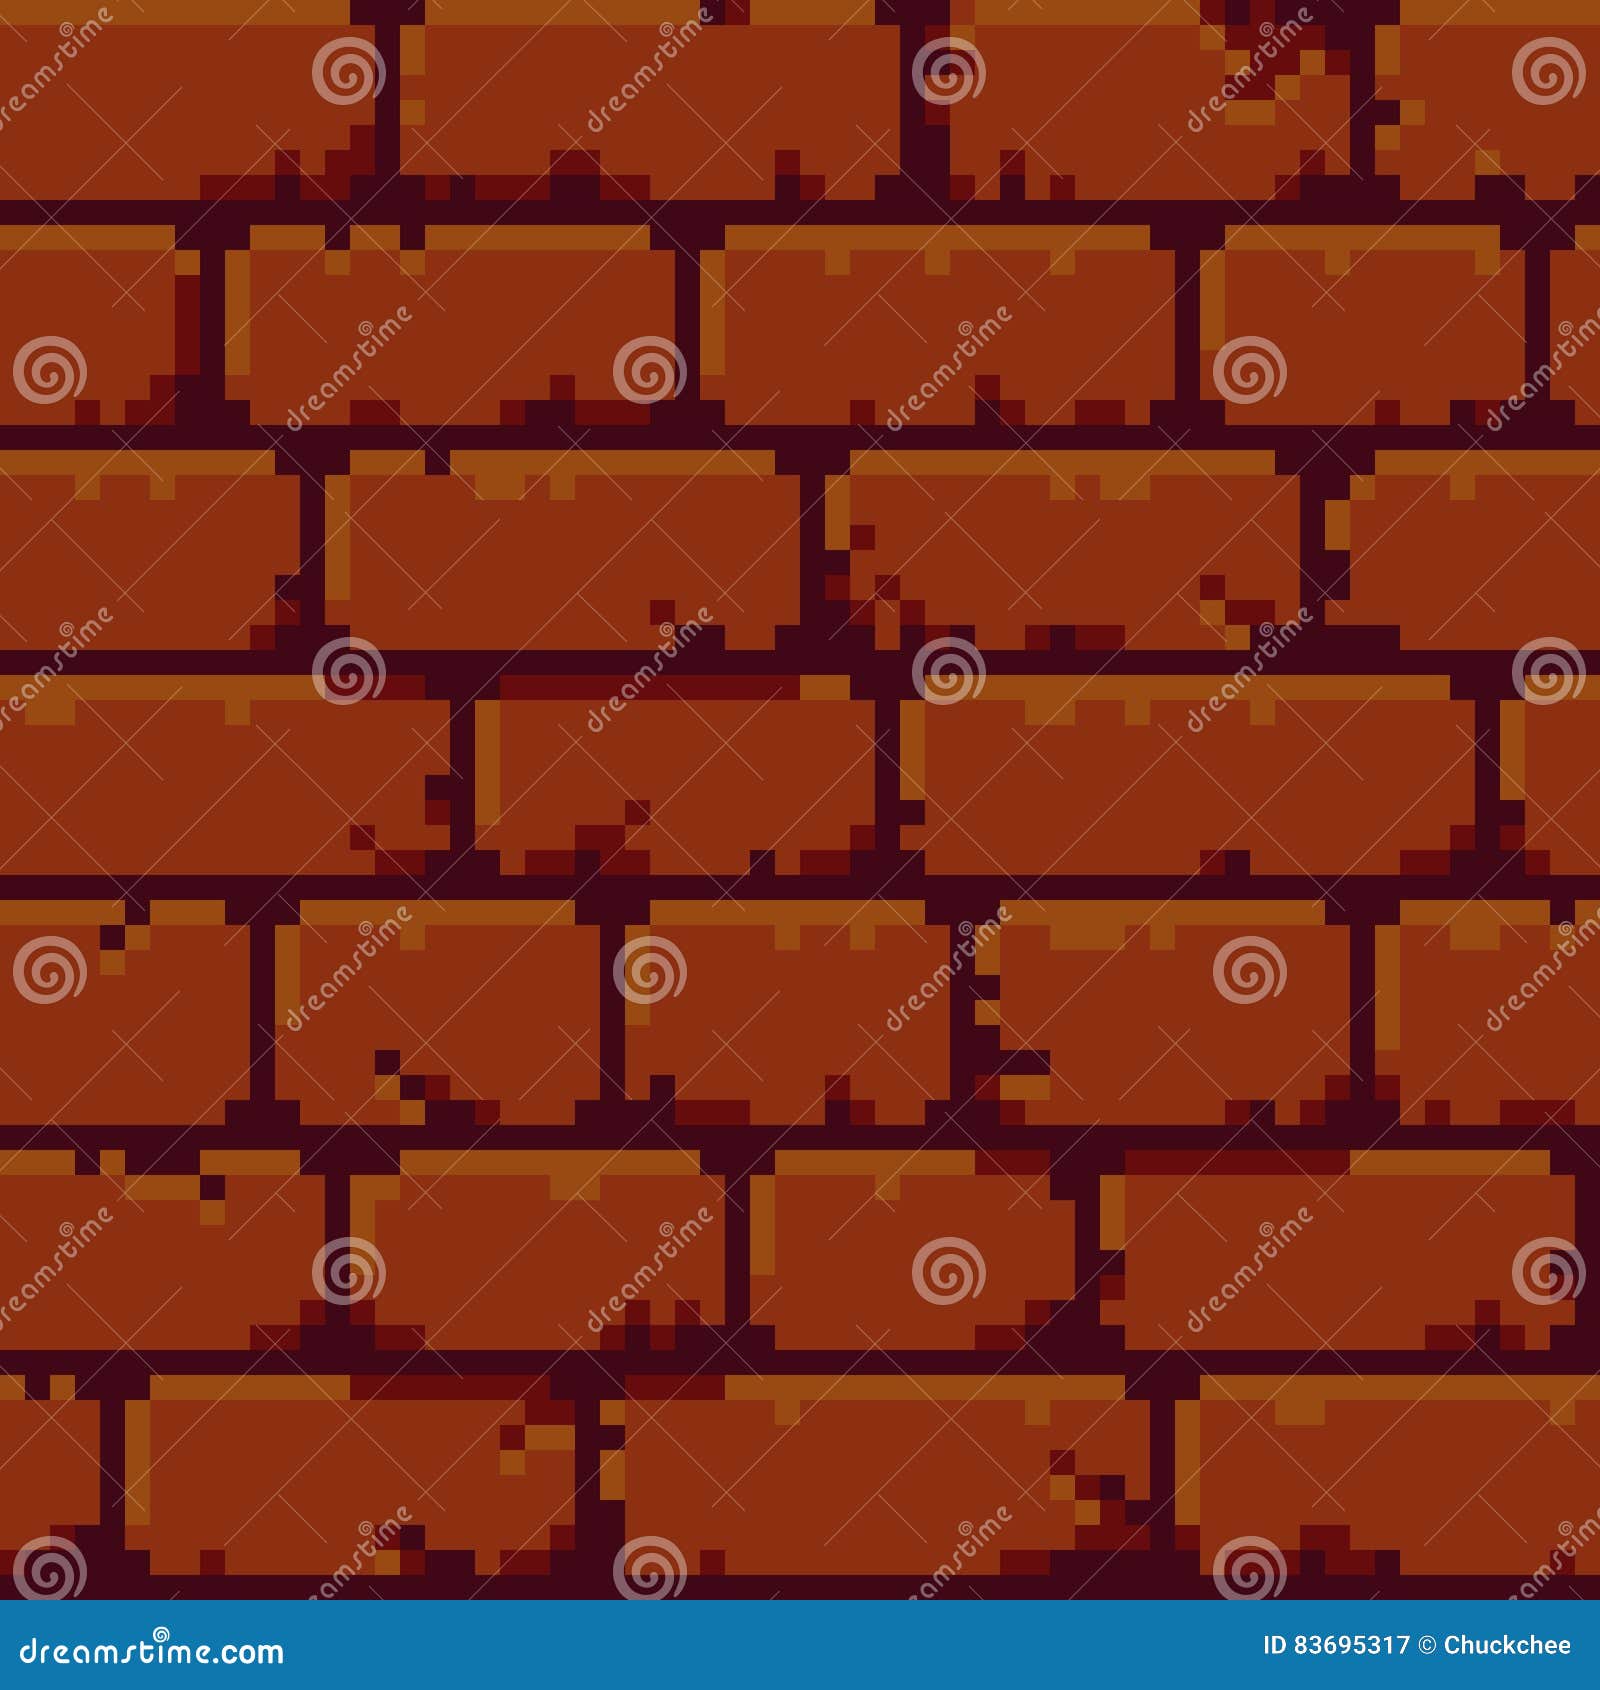 Pixel Brick Wall stock vector. Illustration of level - 83695317